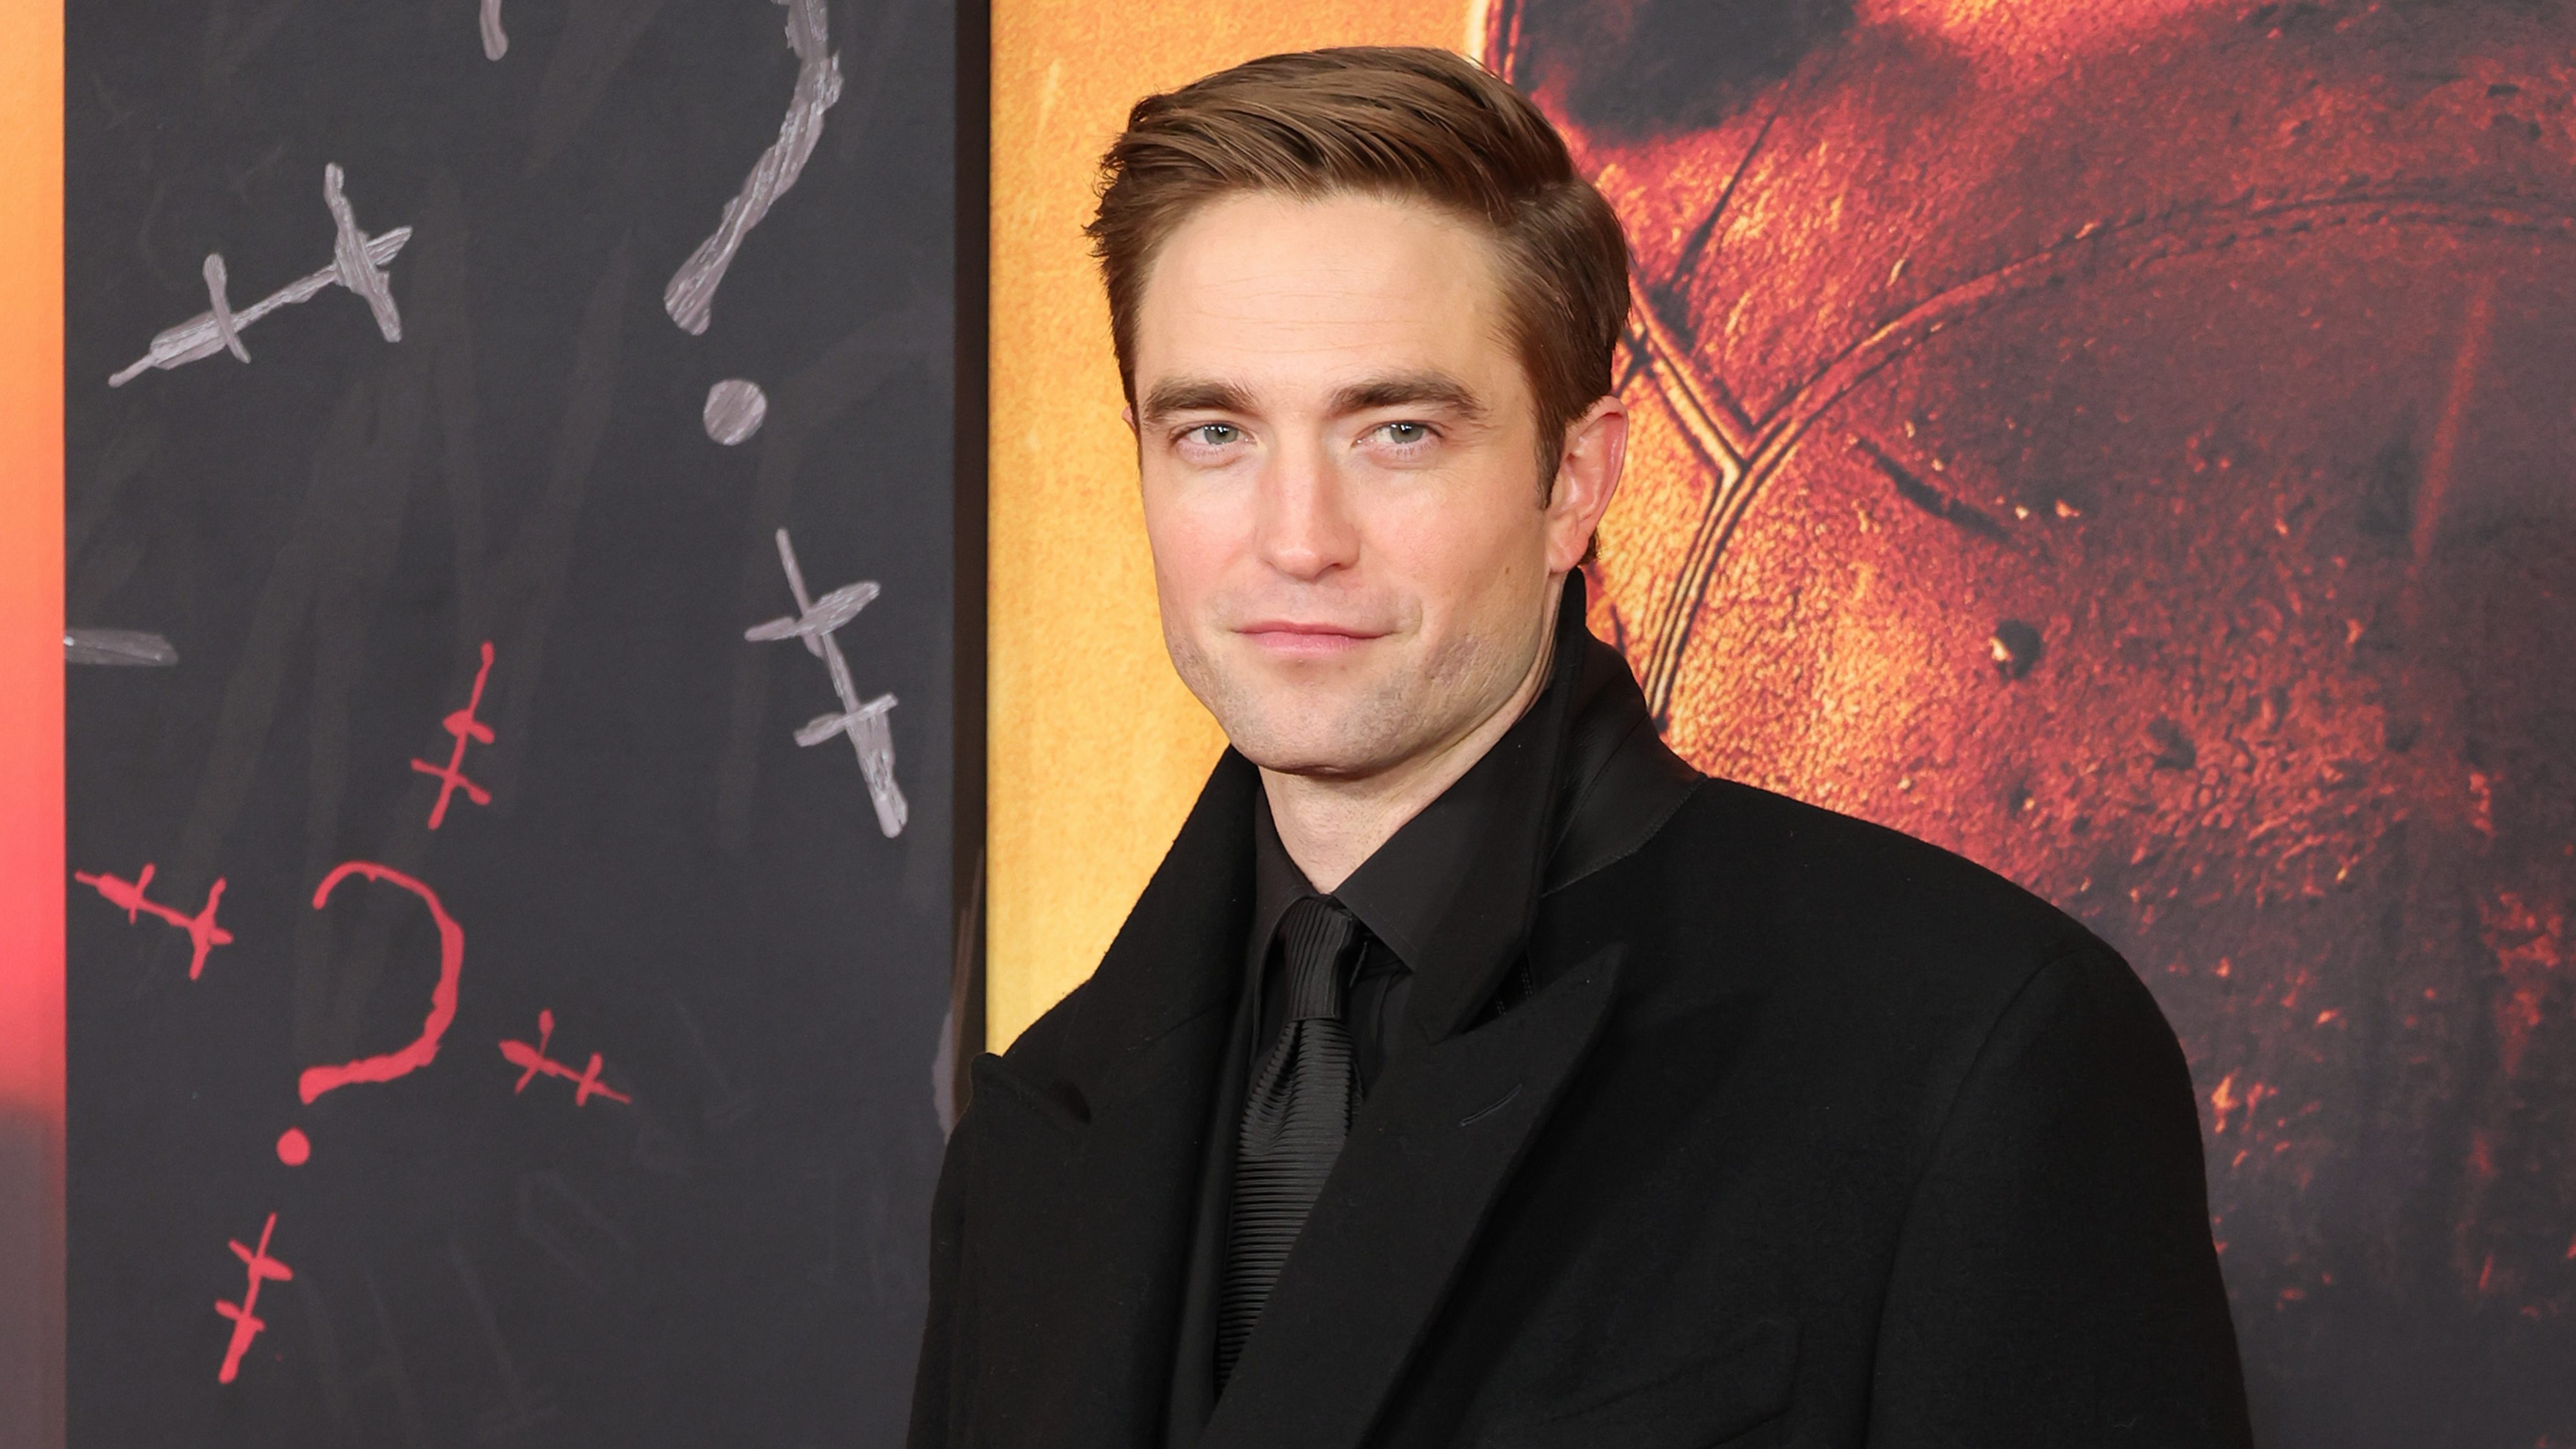 ‘Robert Pattinson' TikTok Is Latest Unlikely Celebrity Profile
Raising Questions